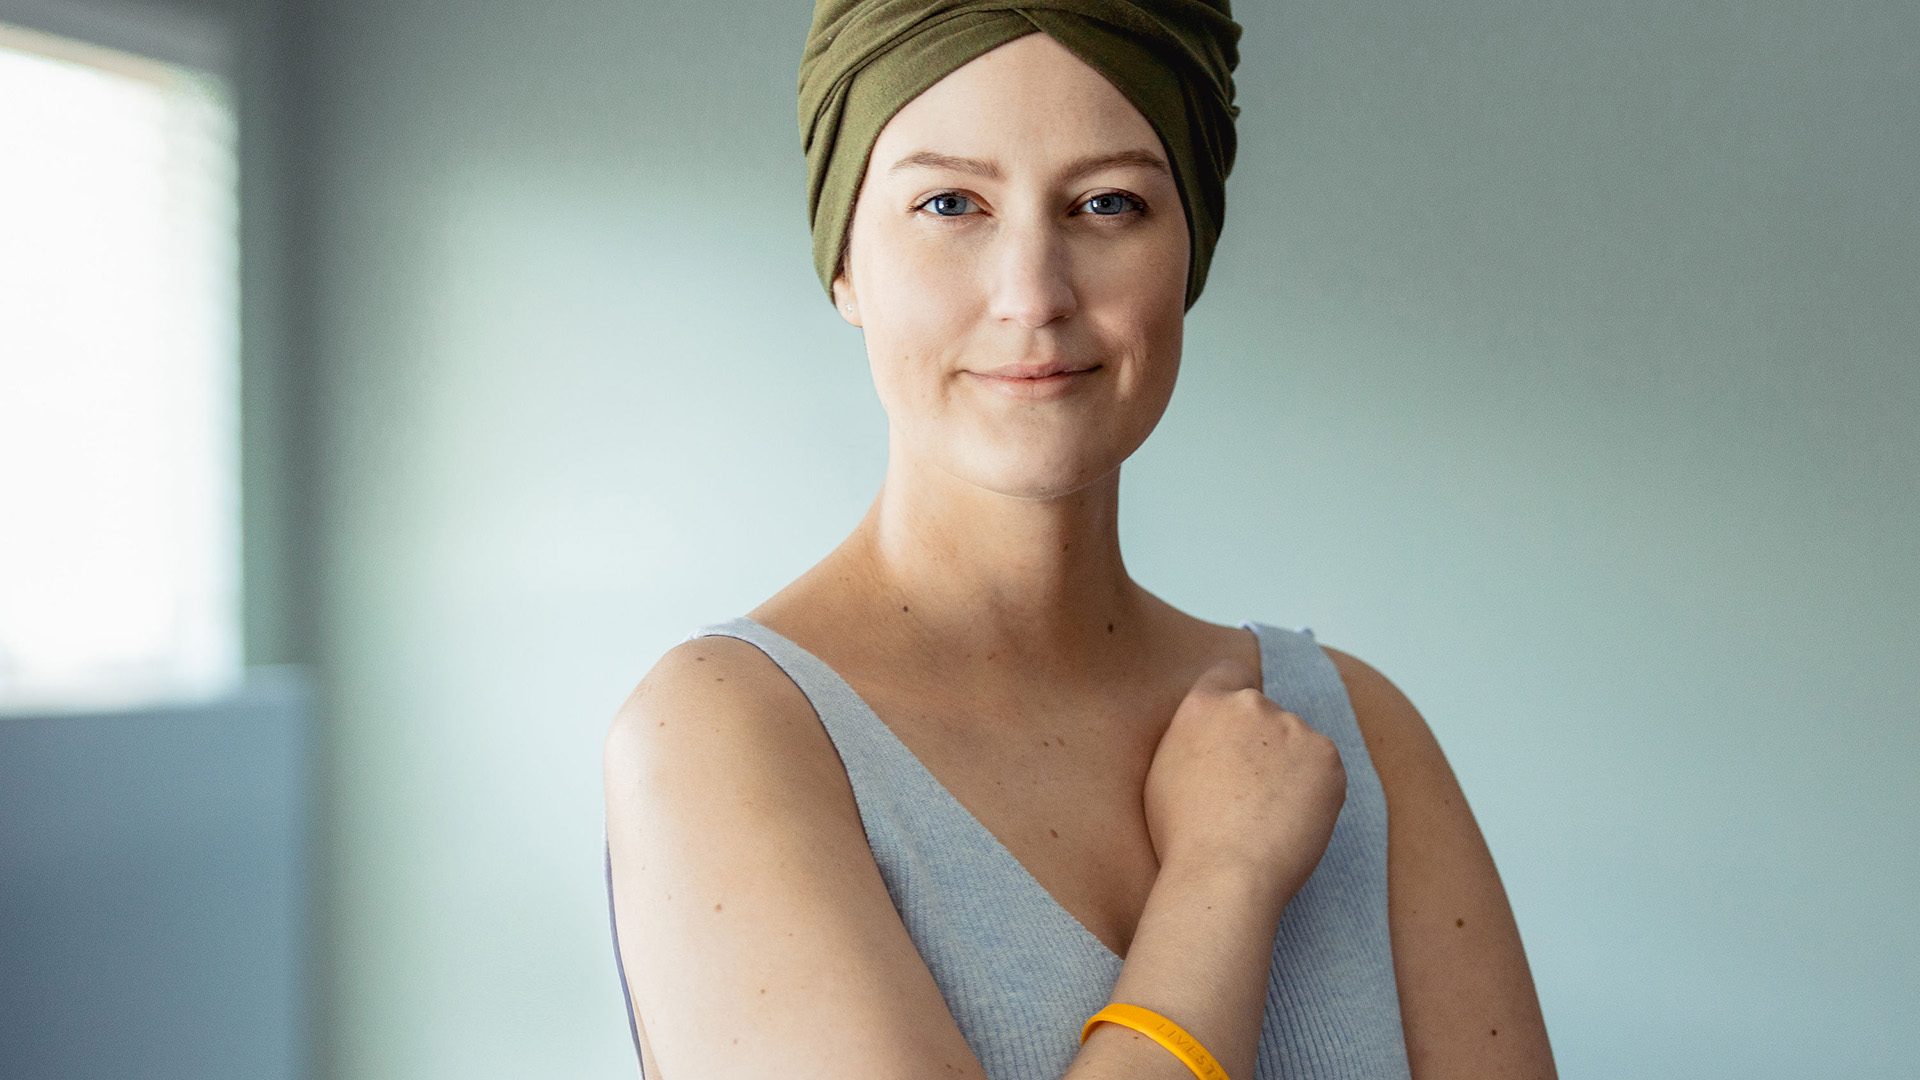 A female cancer survivor